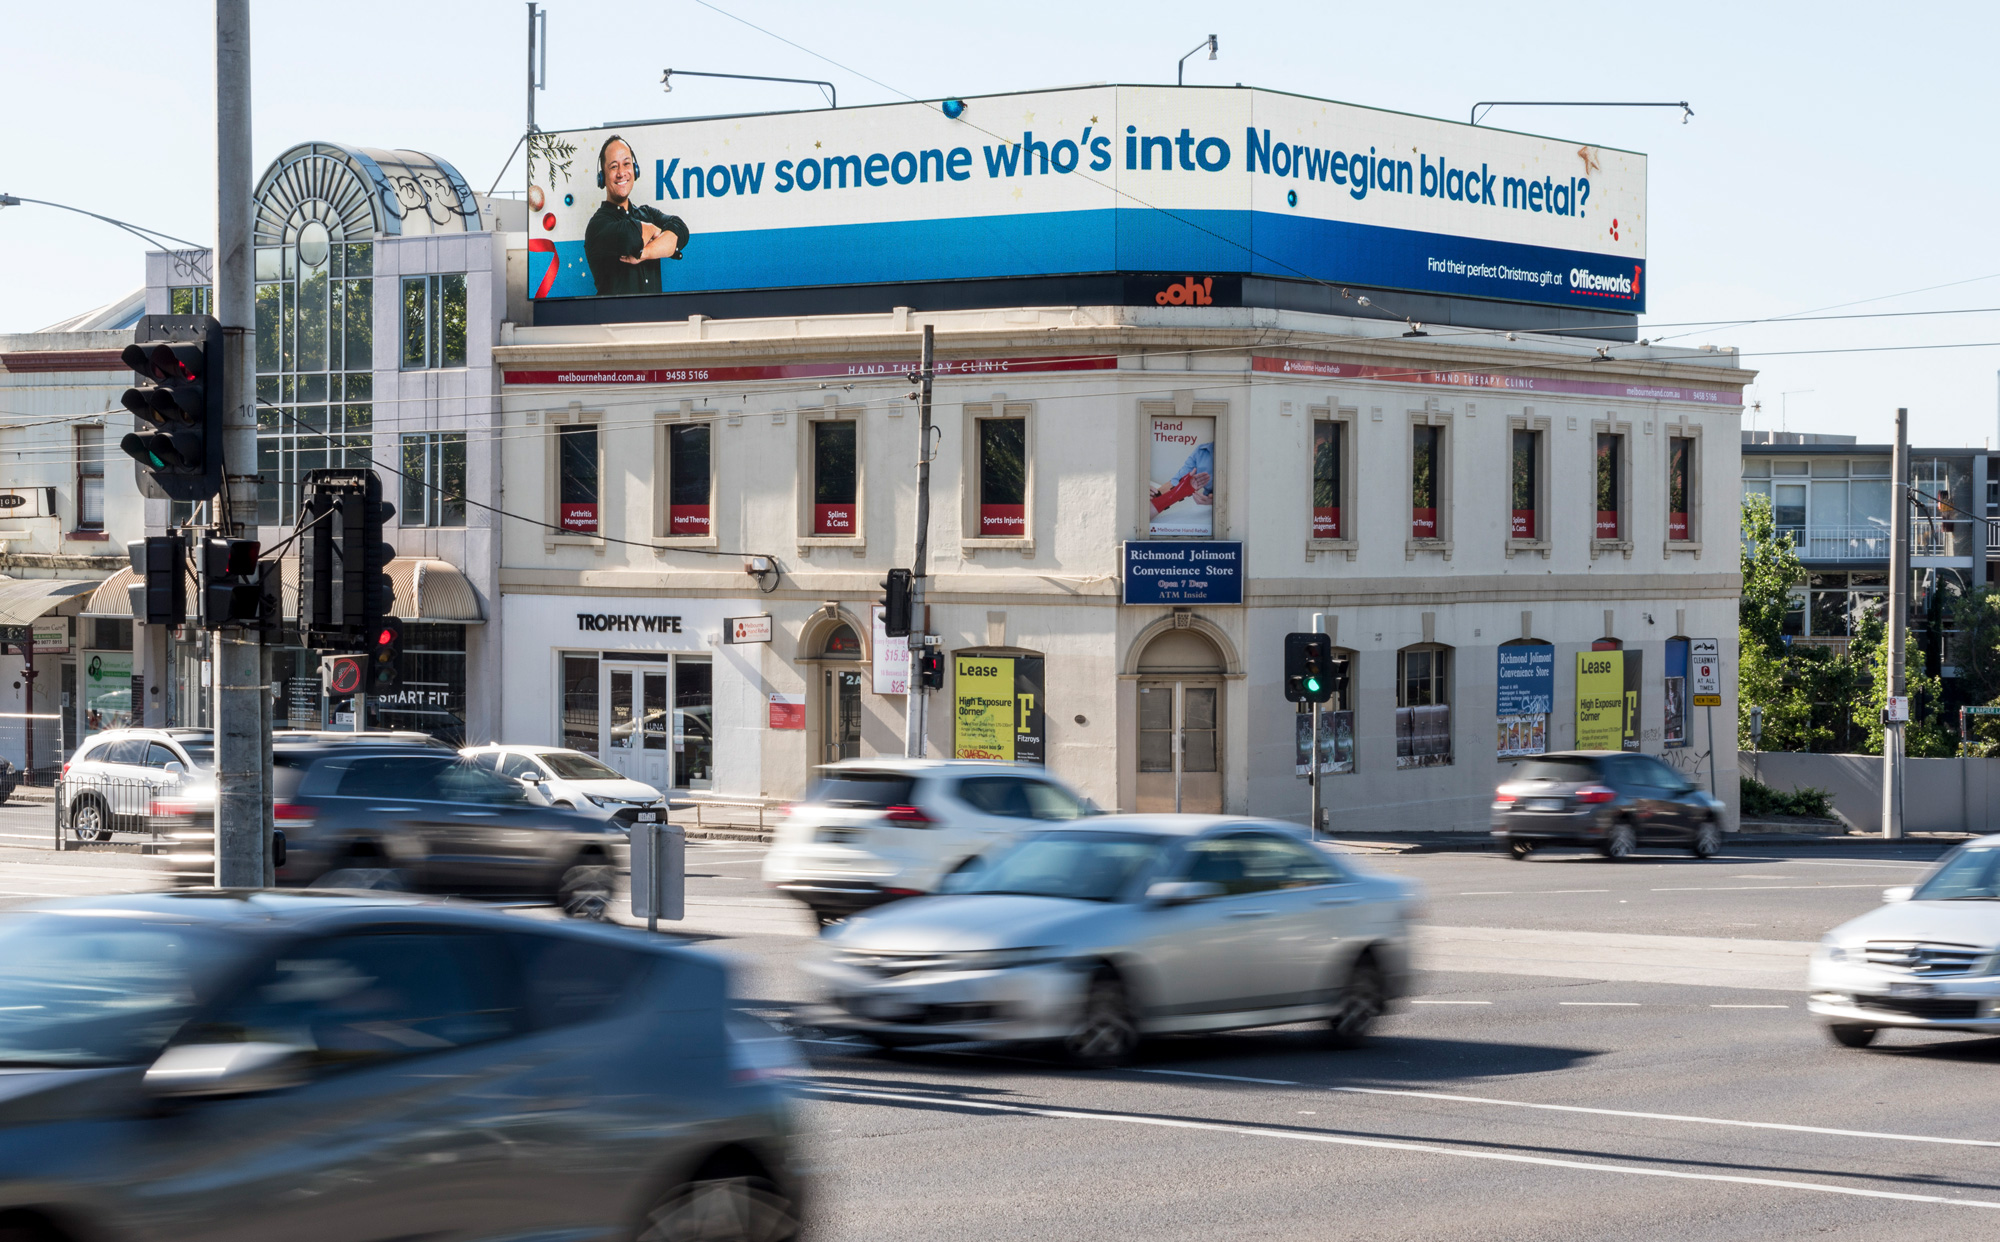 Officeworks billboard advertising on road